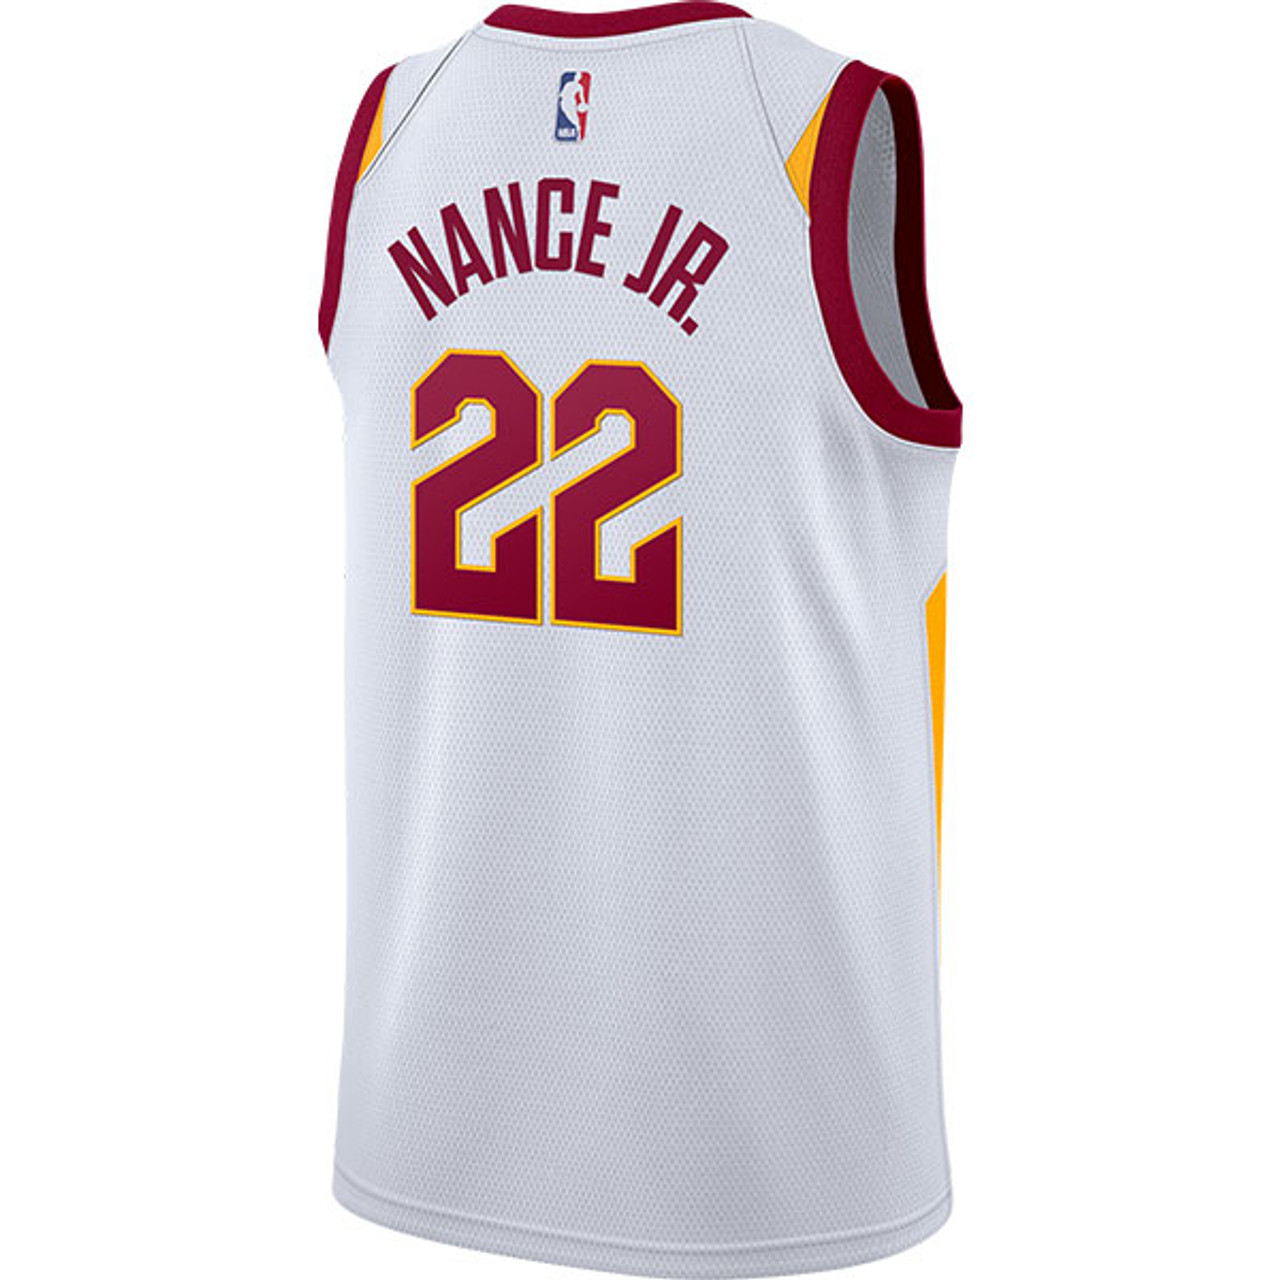 [WHITE] #22 Larry Nance Jr. Jersey | Cleveland Cavaliers